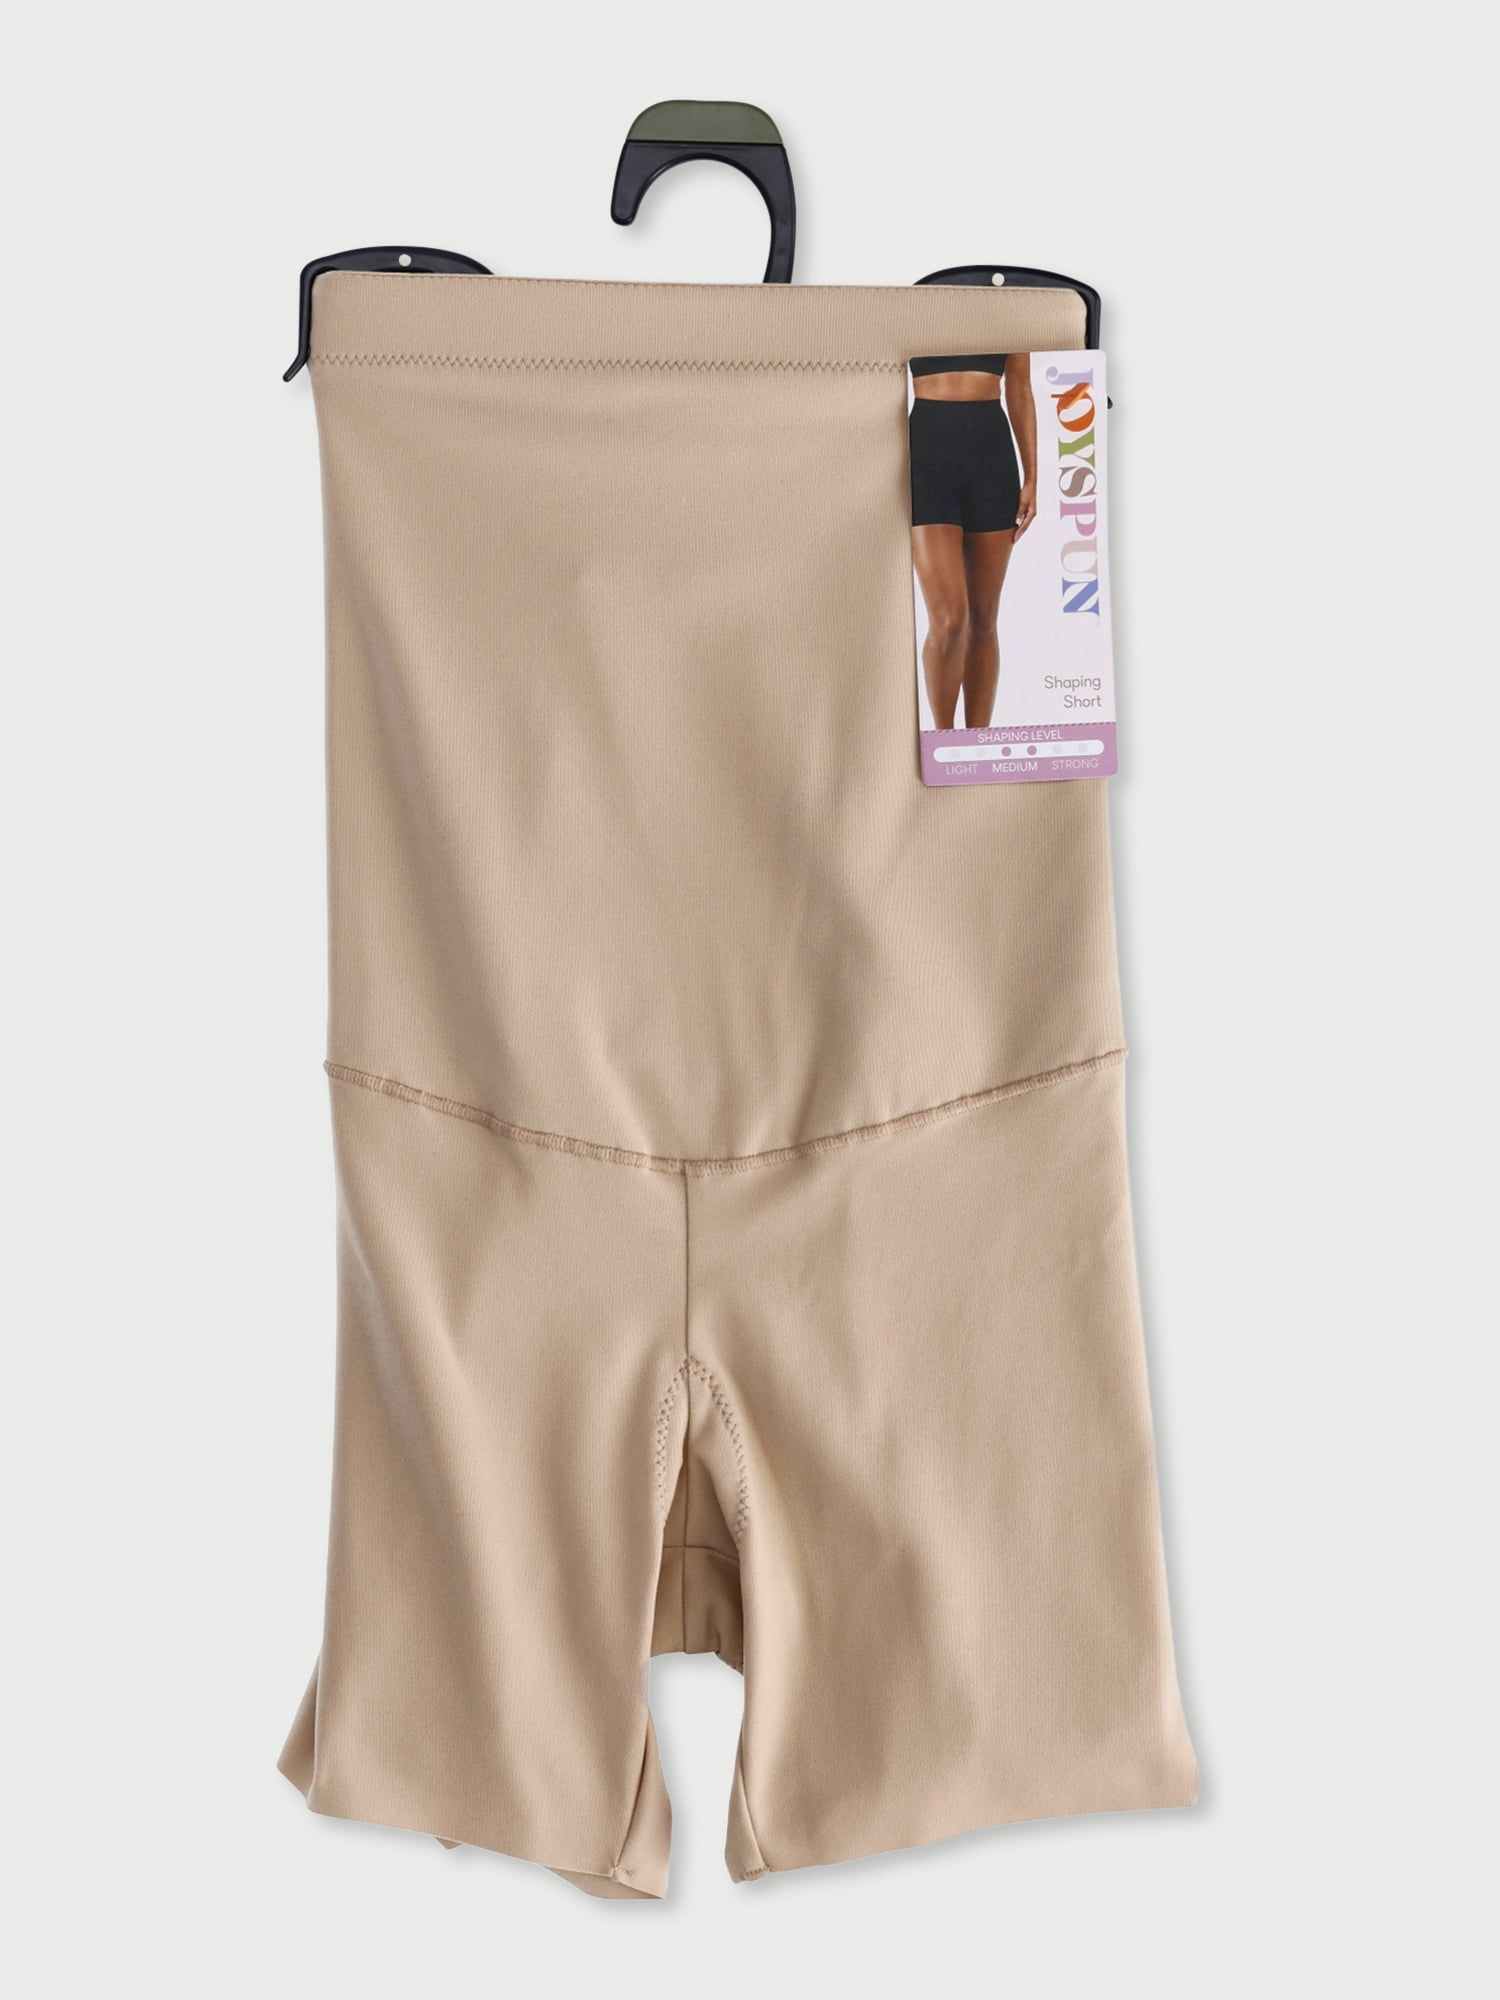 Joyspun Women's Midrise Shaping Boyshort Underwear, Sizes S to 3X 